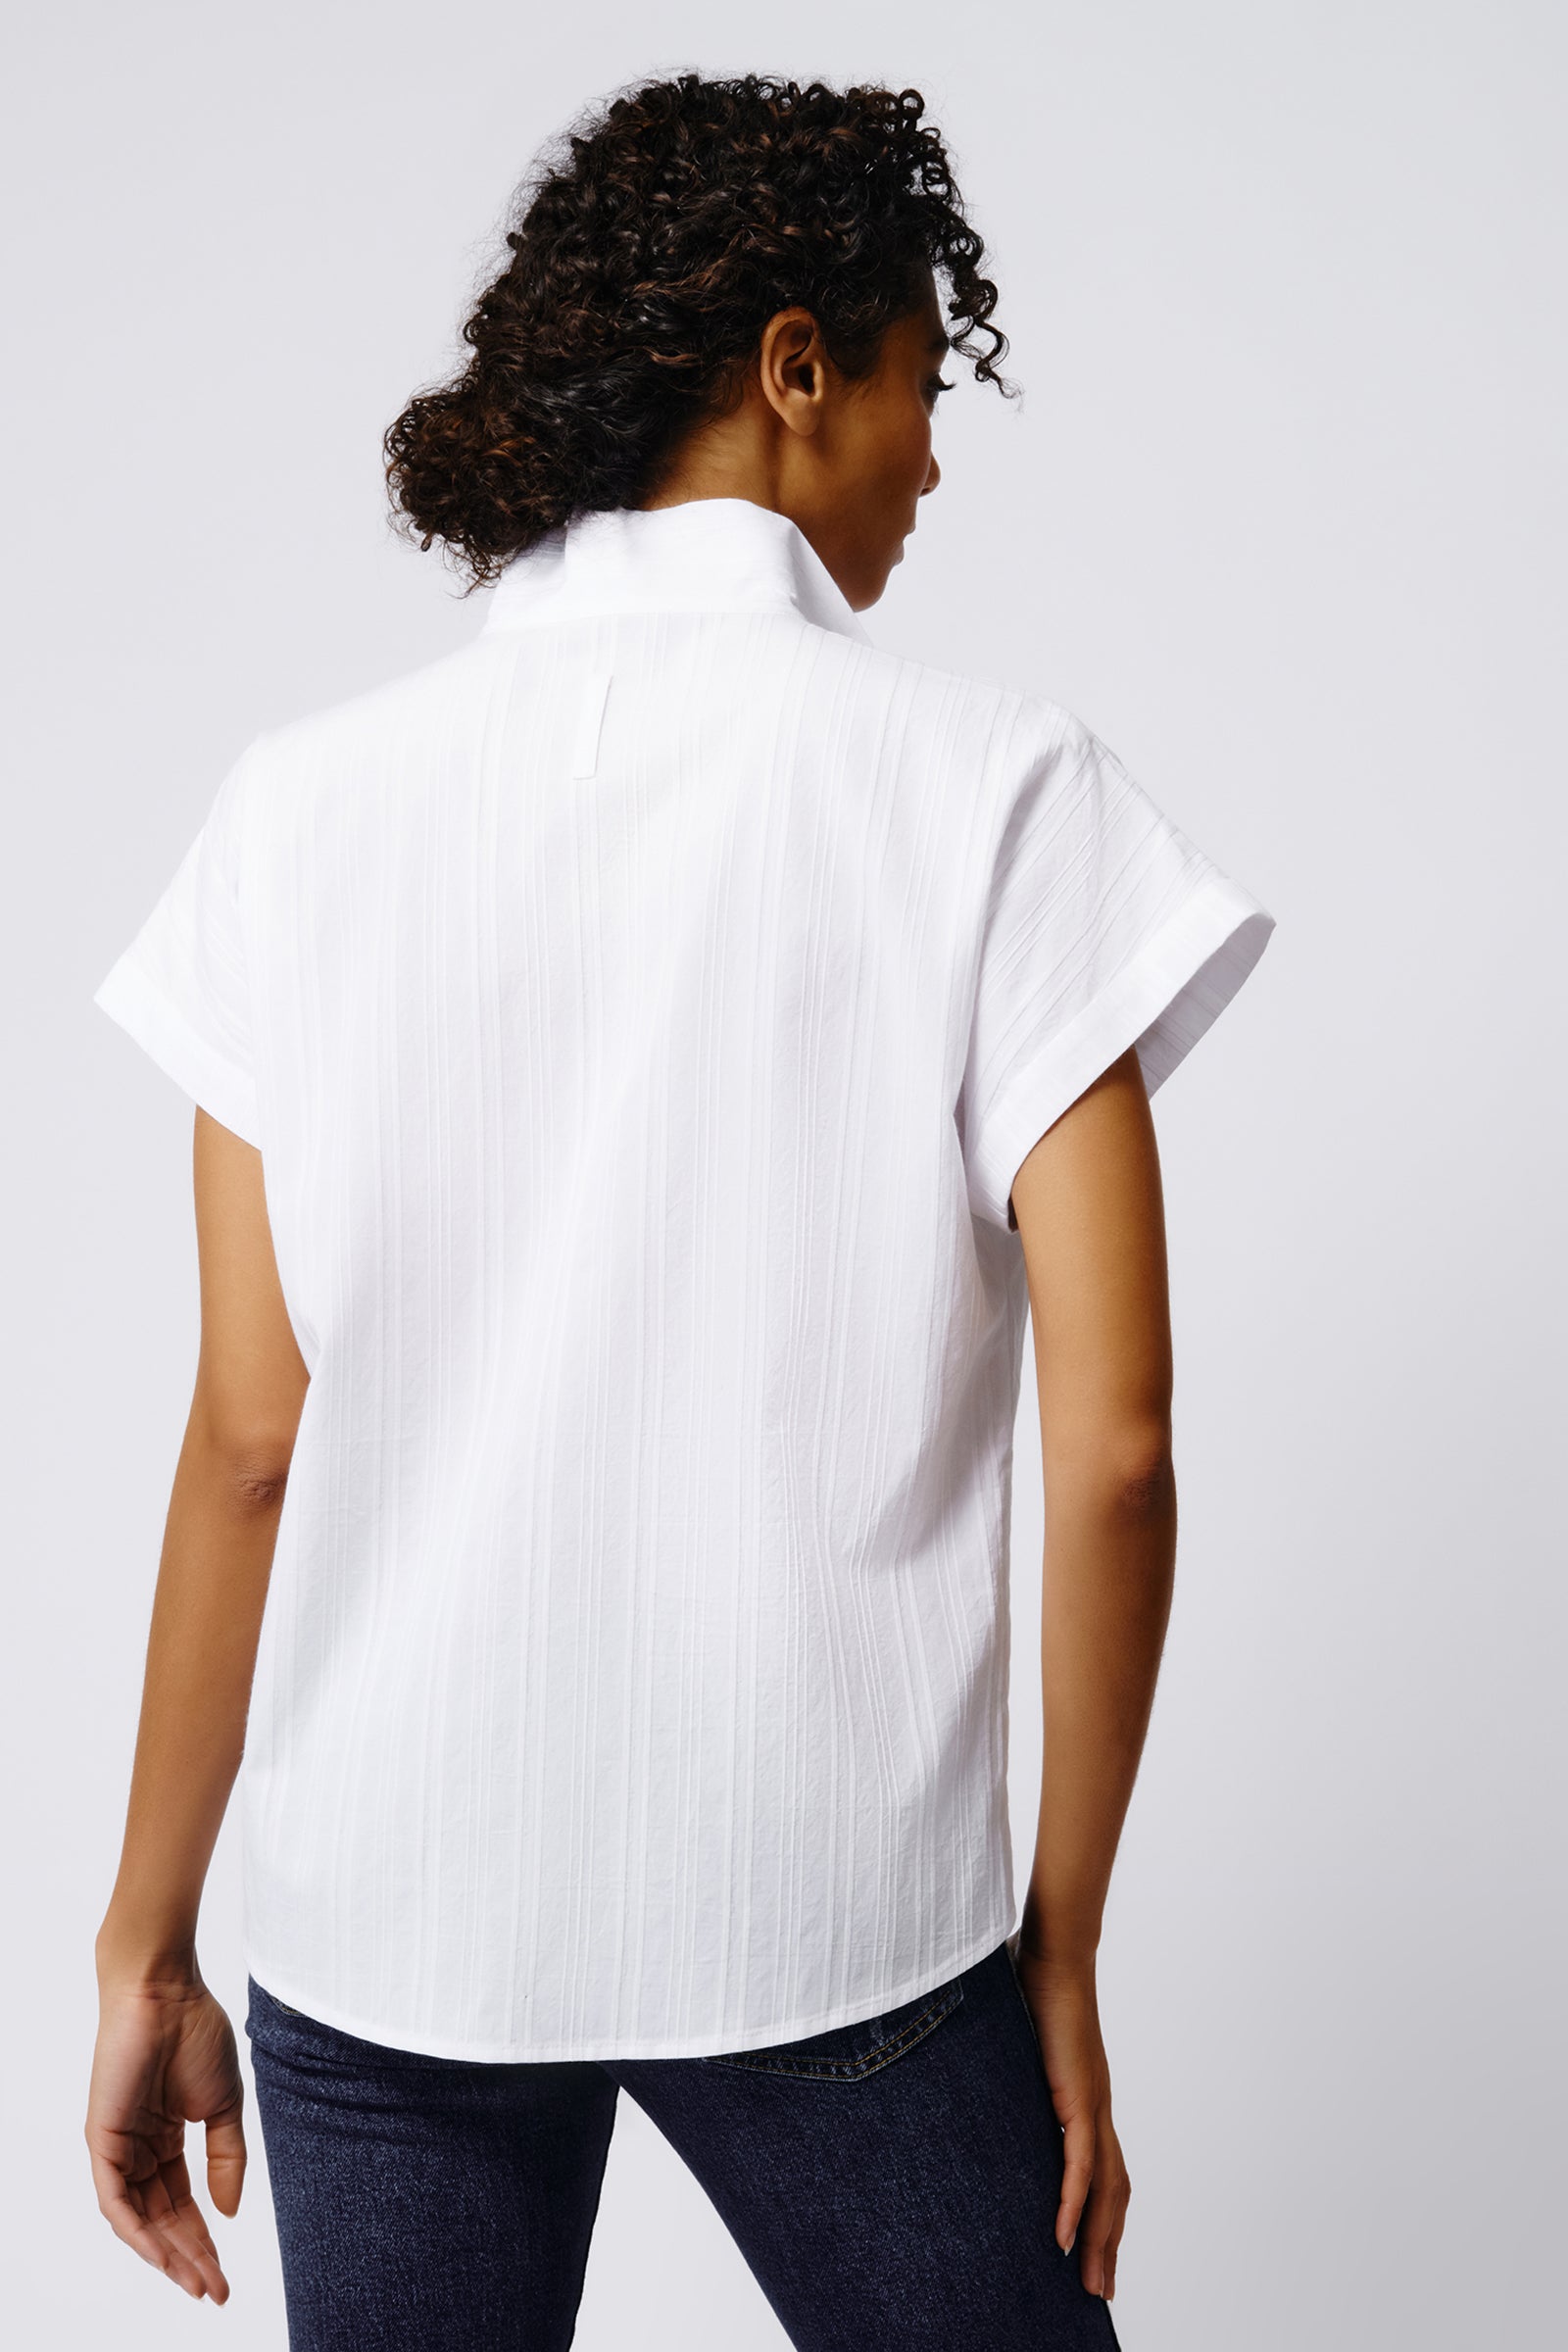 Kal Rieman Cabana Shirt in White Stripe on Model Front View Crop